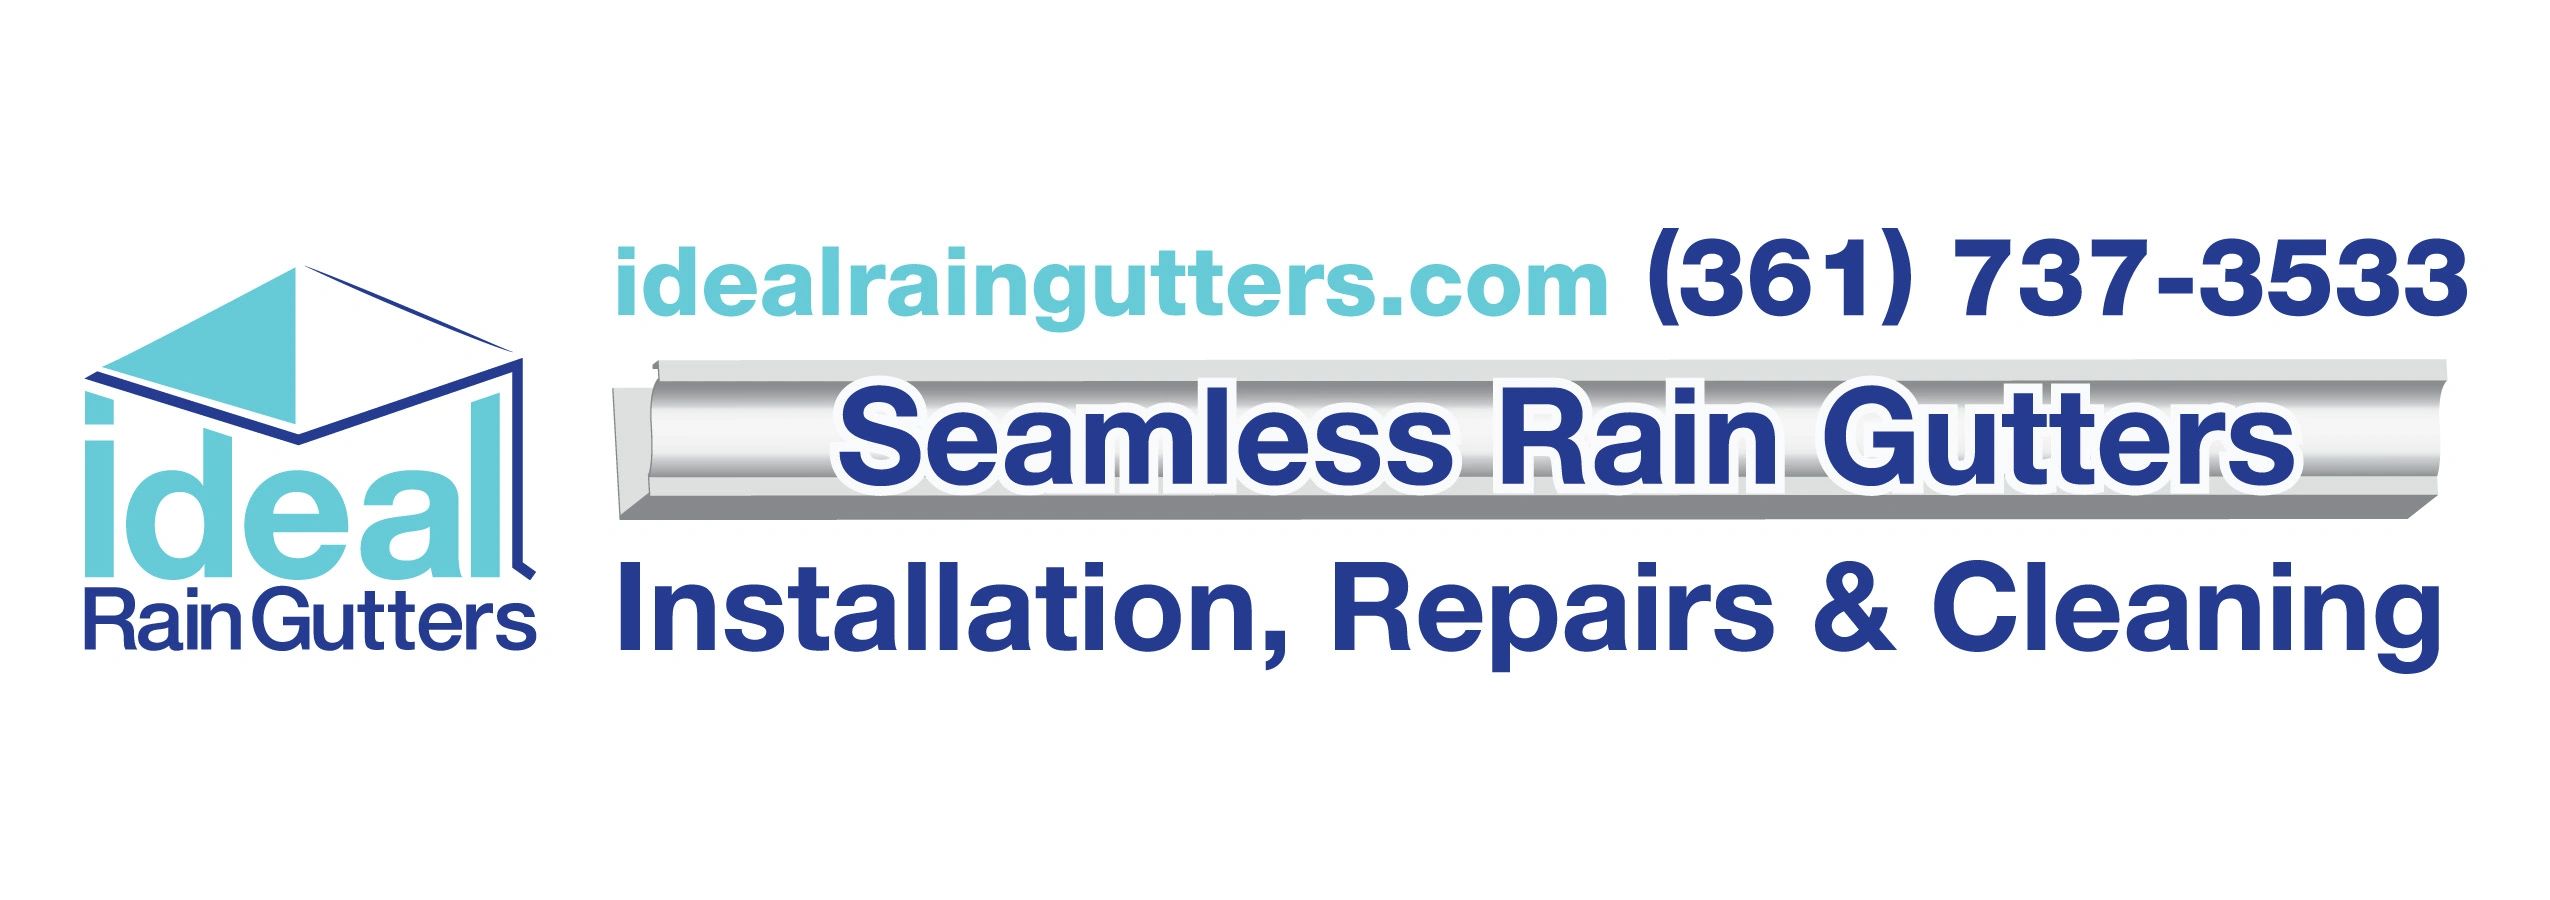 idealraingutters.com (361) 737-3533 
Seamless Rain Gutters Installation, Repairs  & Cleaning Ideal 